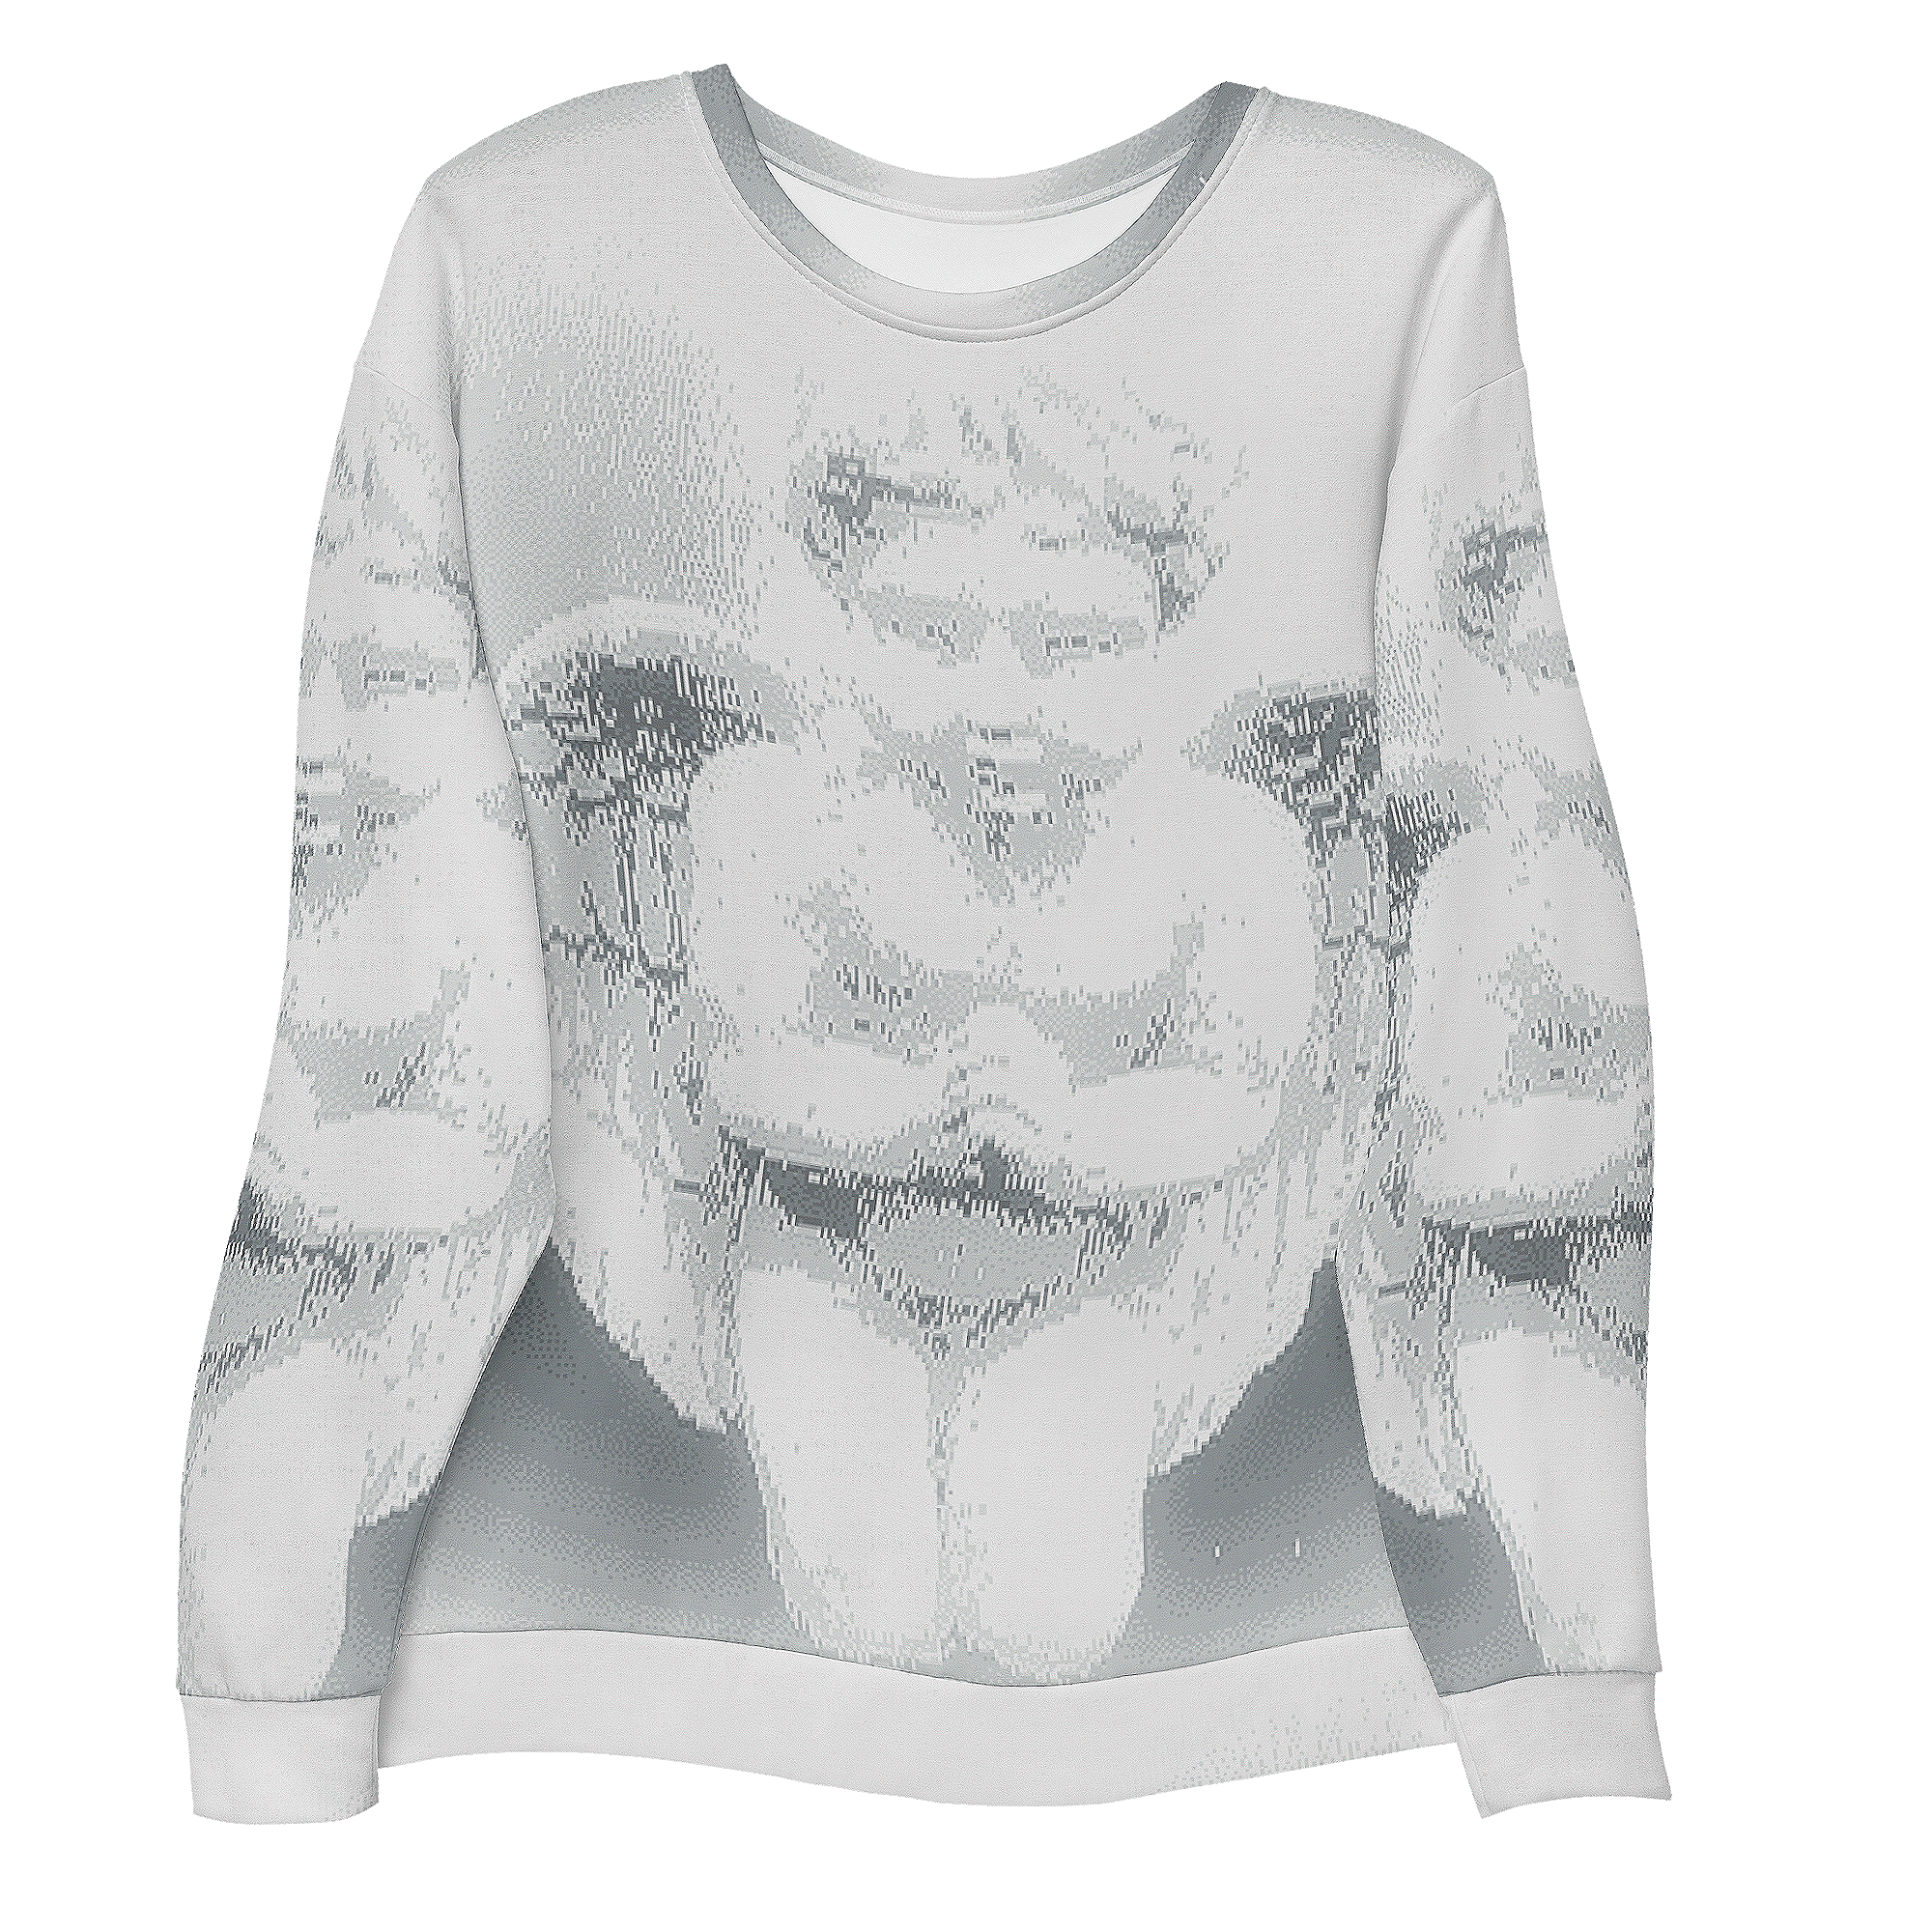 Dream 6® Deluxe Sweatshirt (only 10 on sale) - Kikillo Club